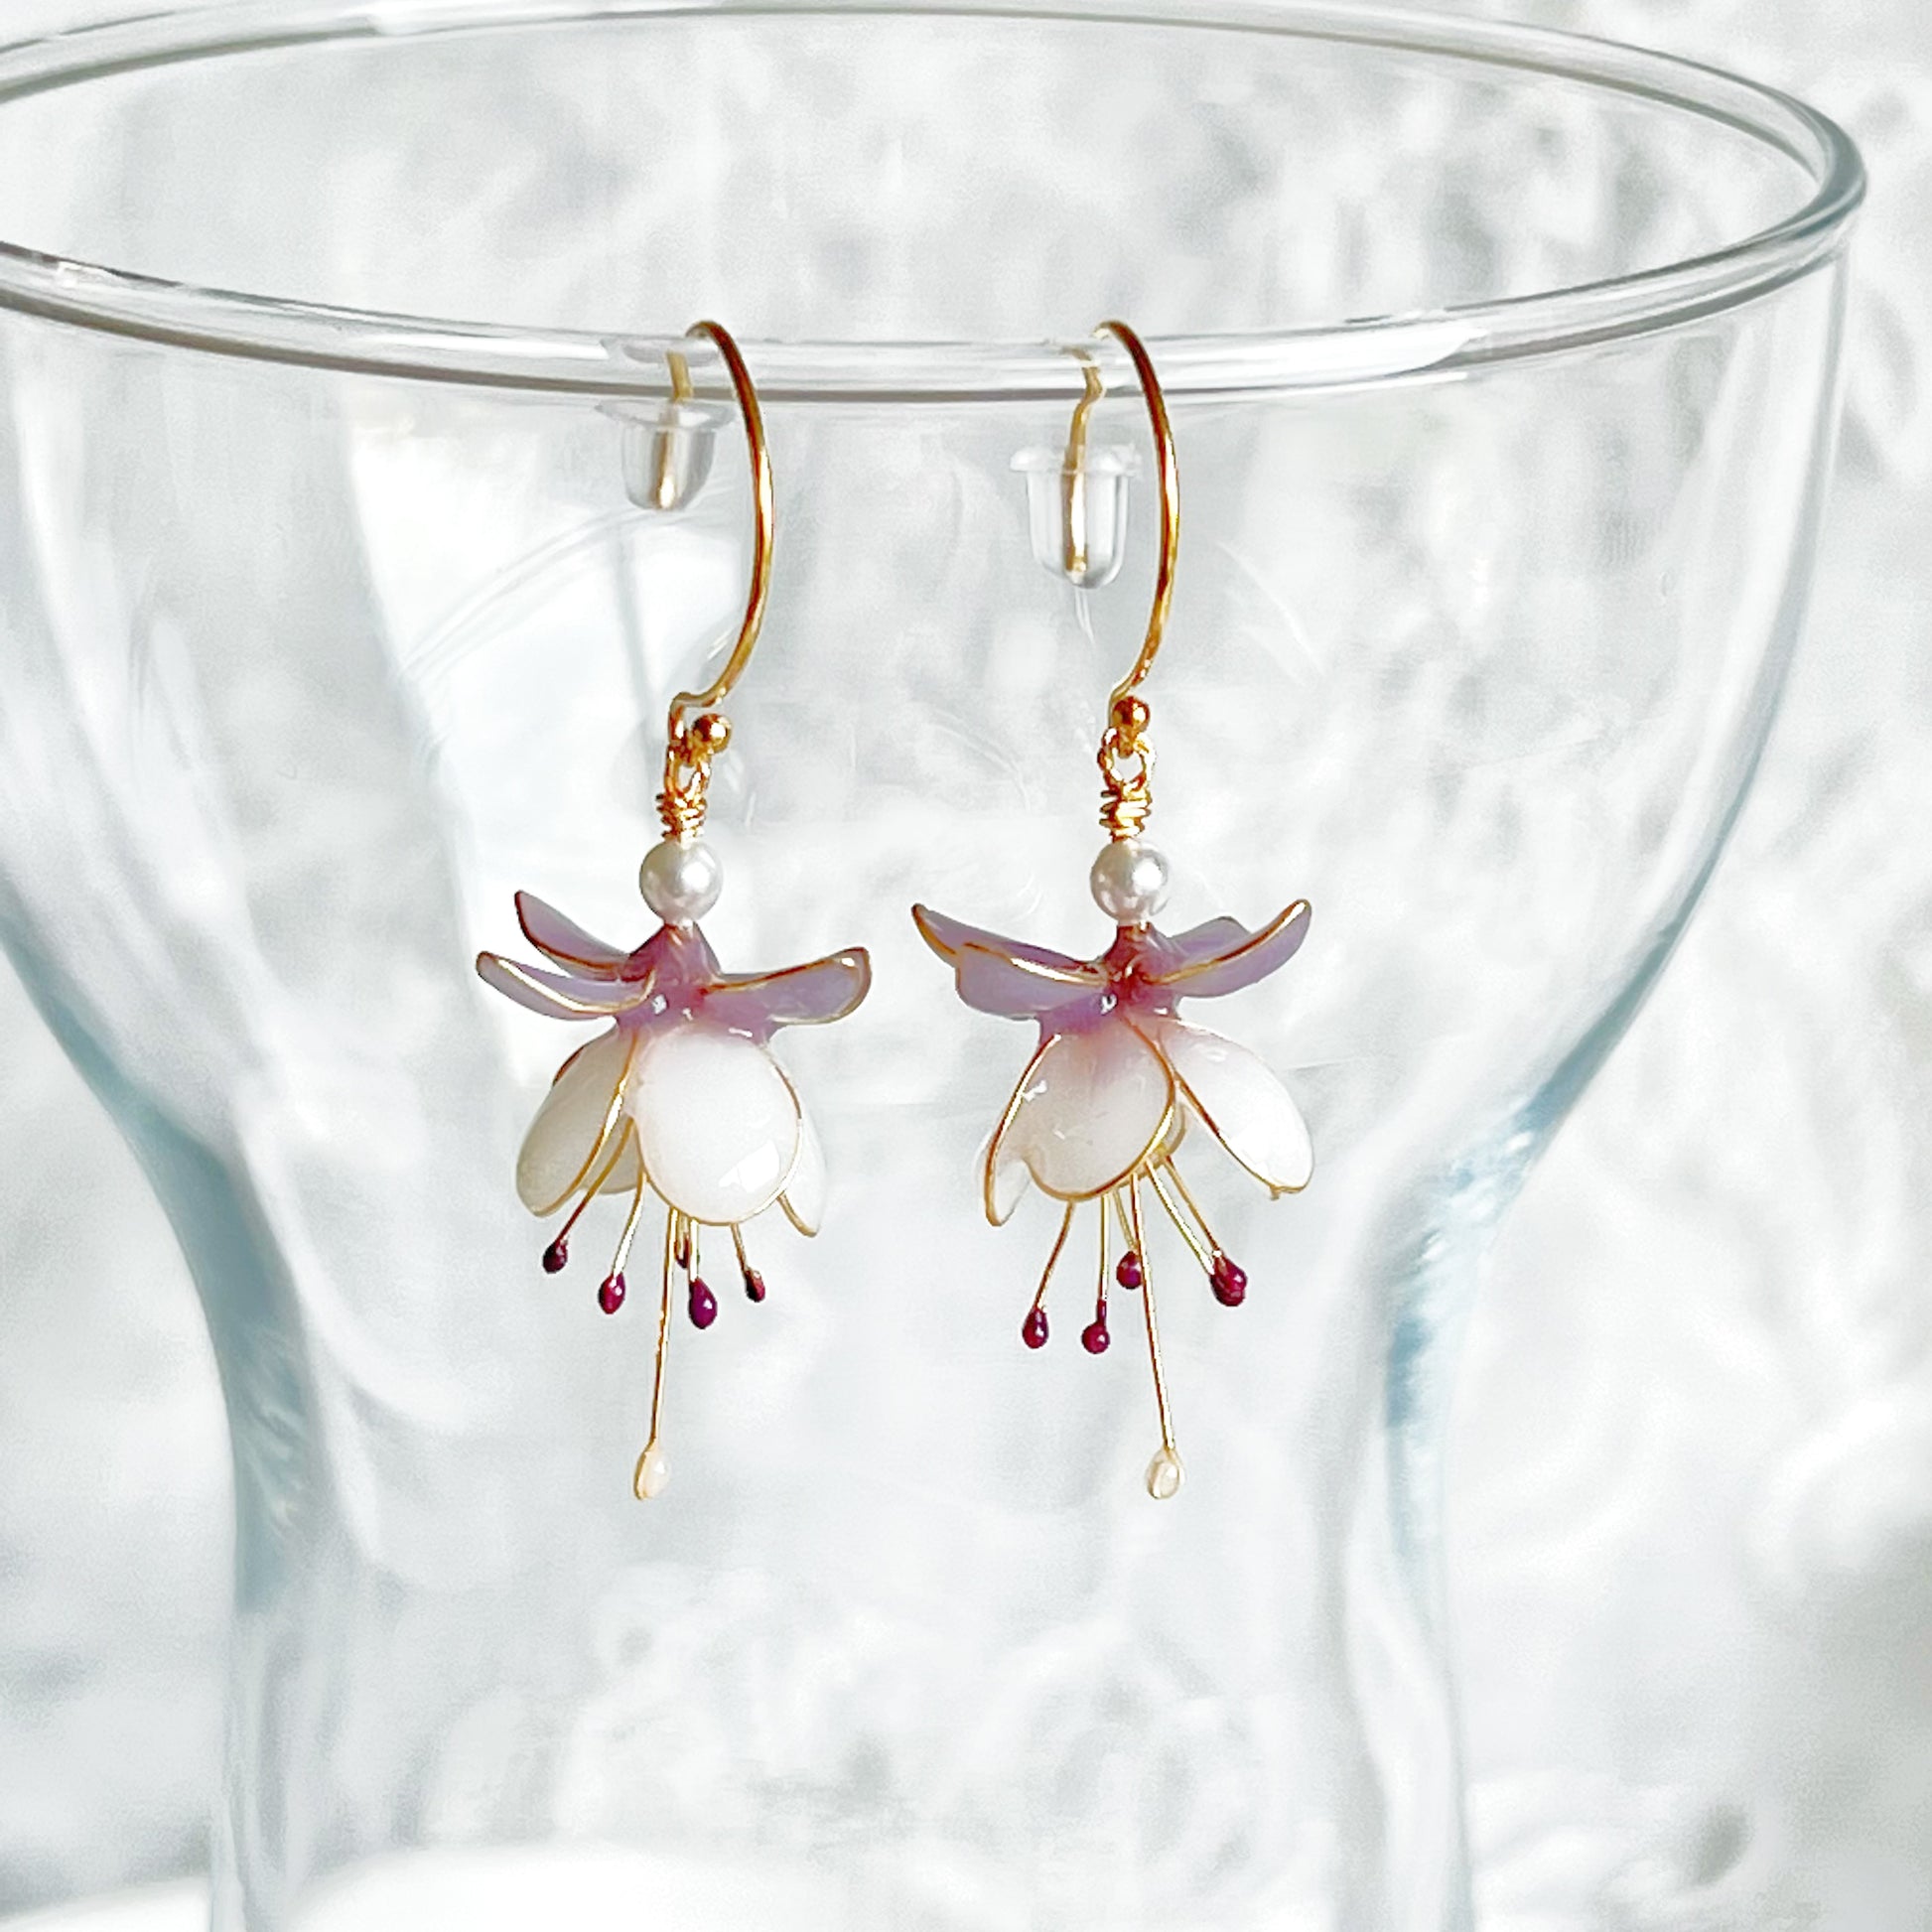 Handmade Purple and White Fuchsia Flower Earrings-Ninaouity